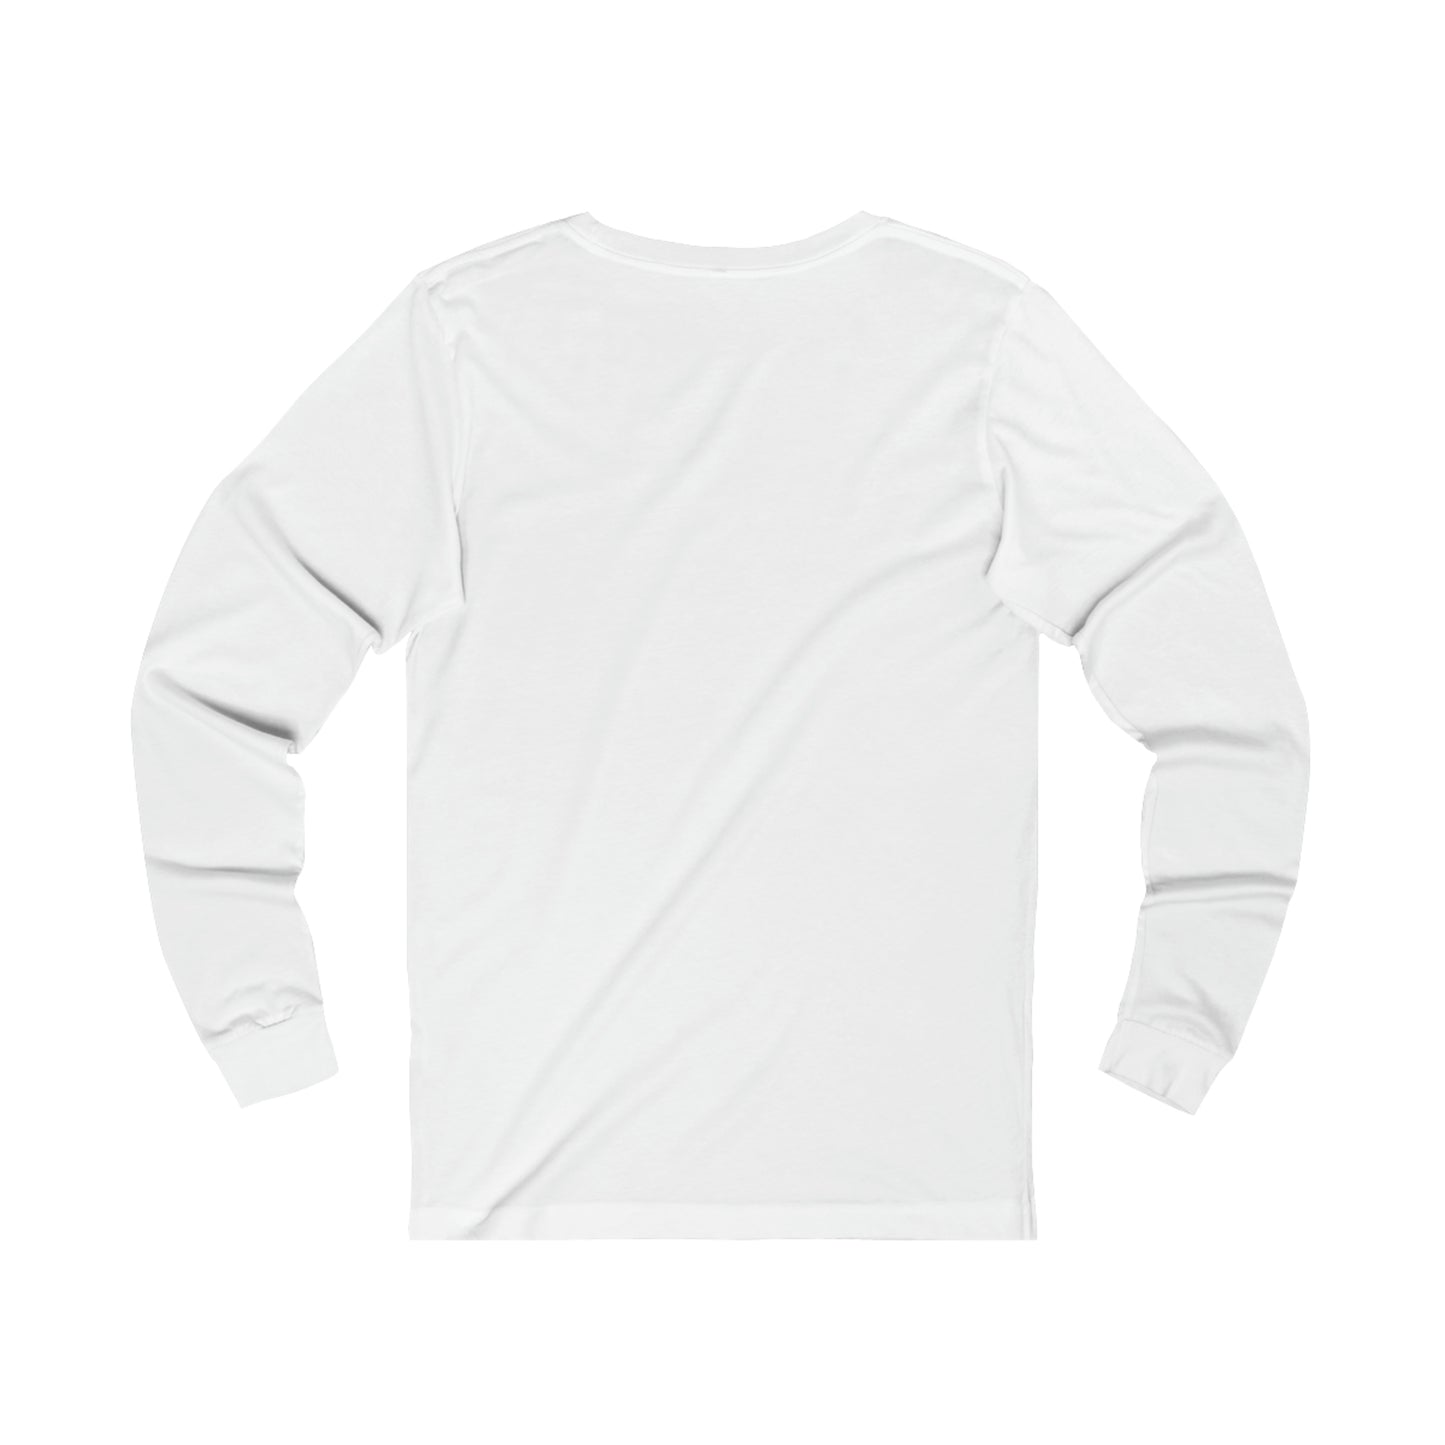 Hot Boys Long Sleeve T-shirt Unisex